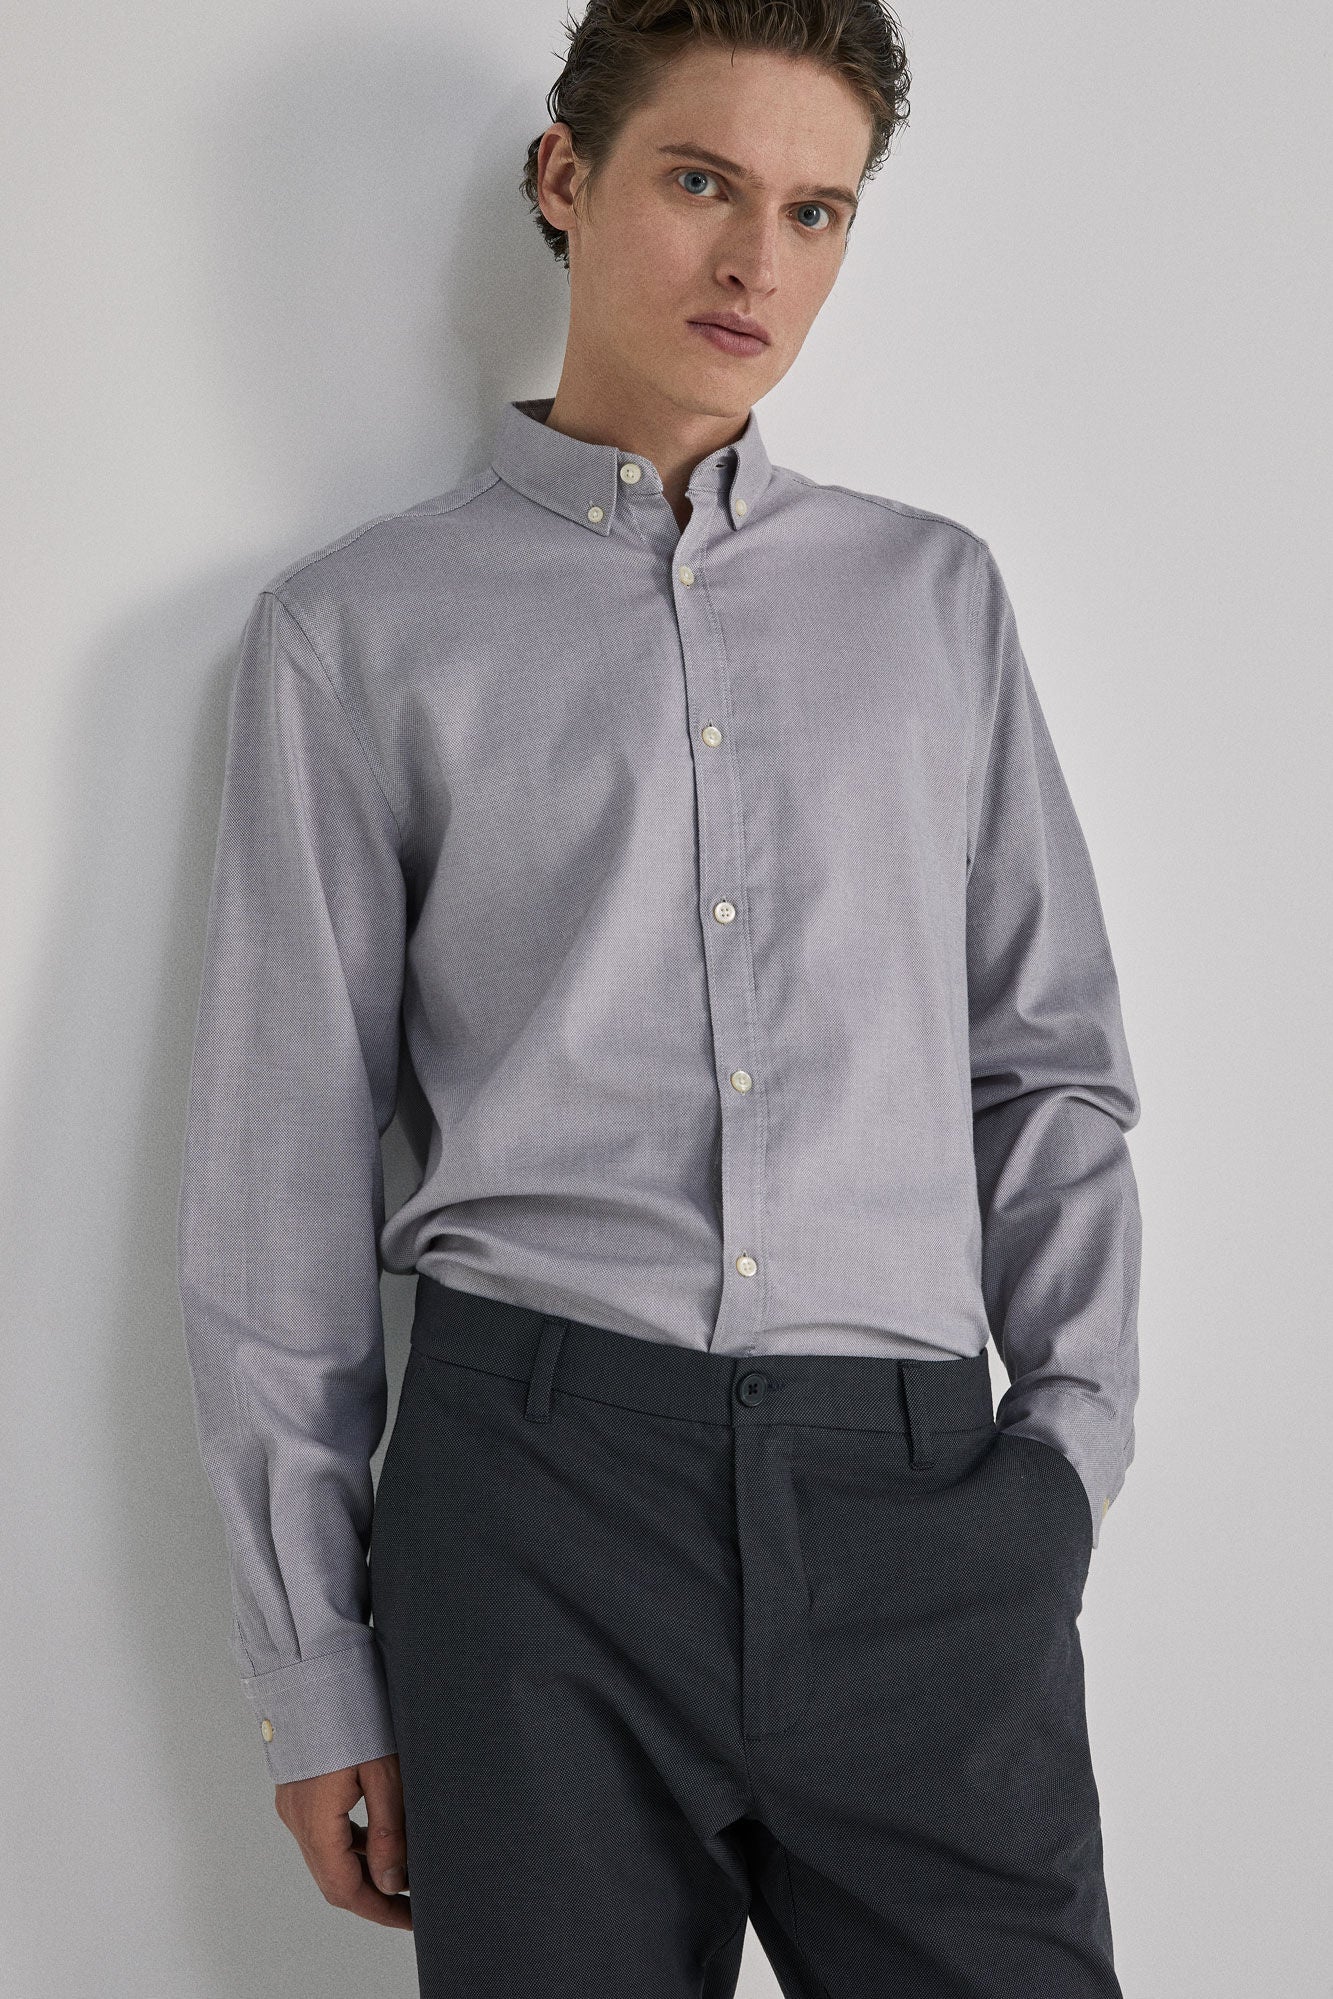 Textured shirt (Custom Fit) - Grey